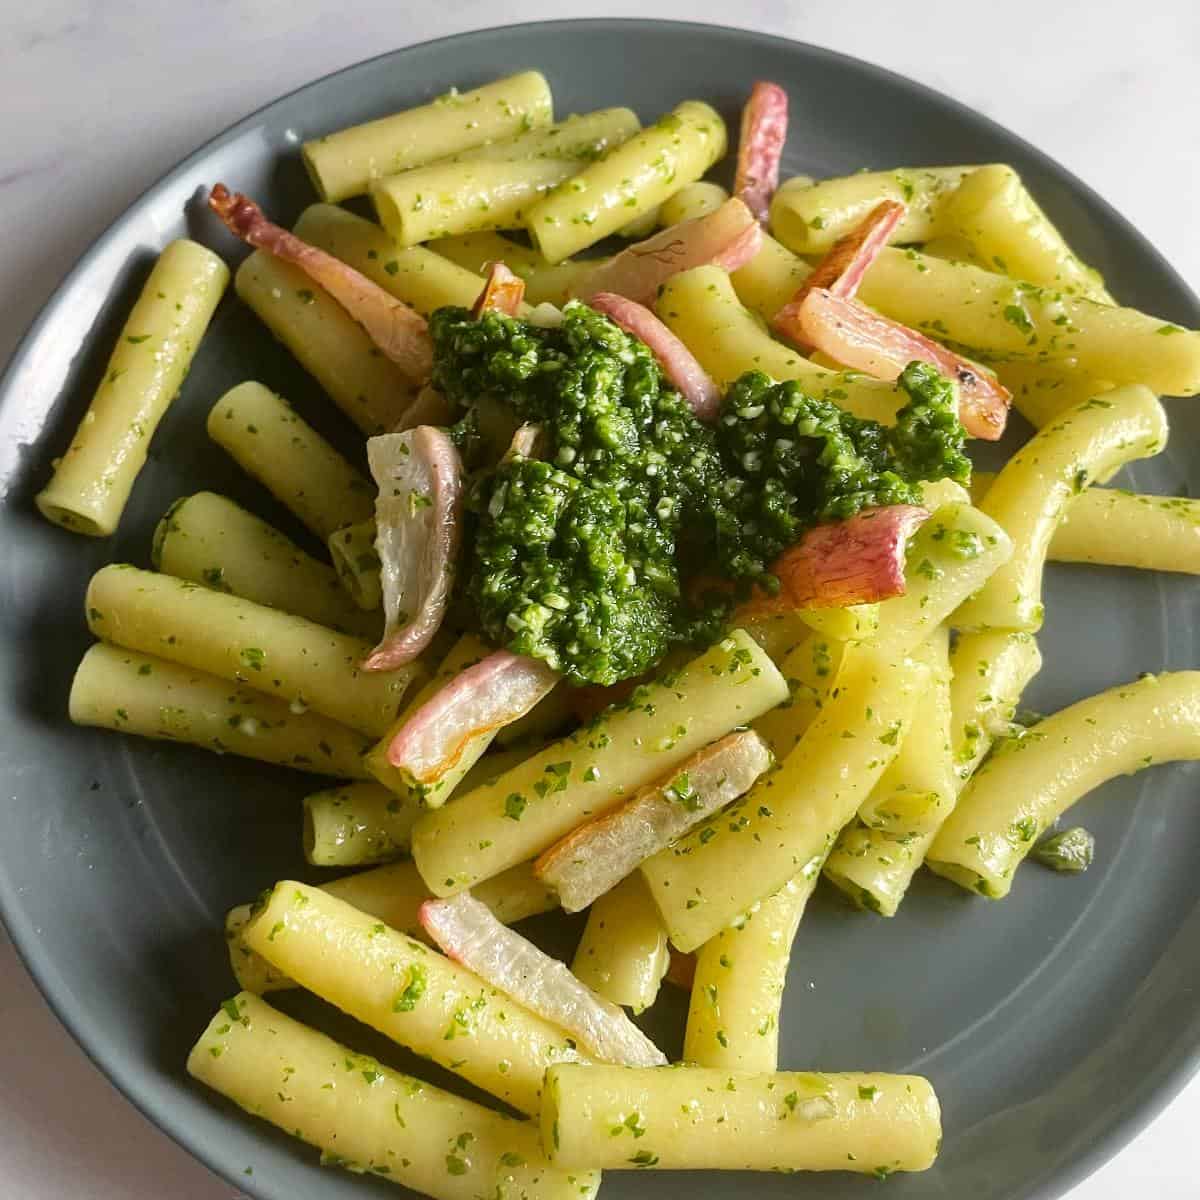 Ziti pasta tossed with radish green pesto and roasted radishes, on a dark gray plate.